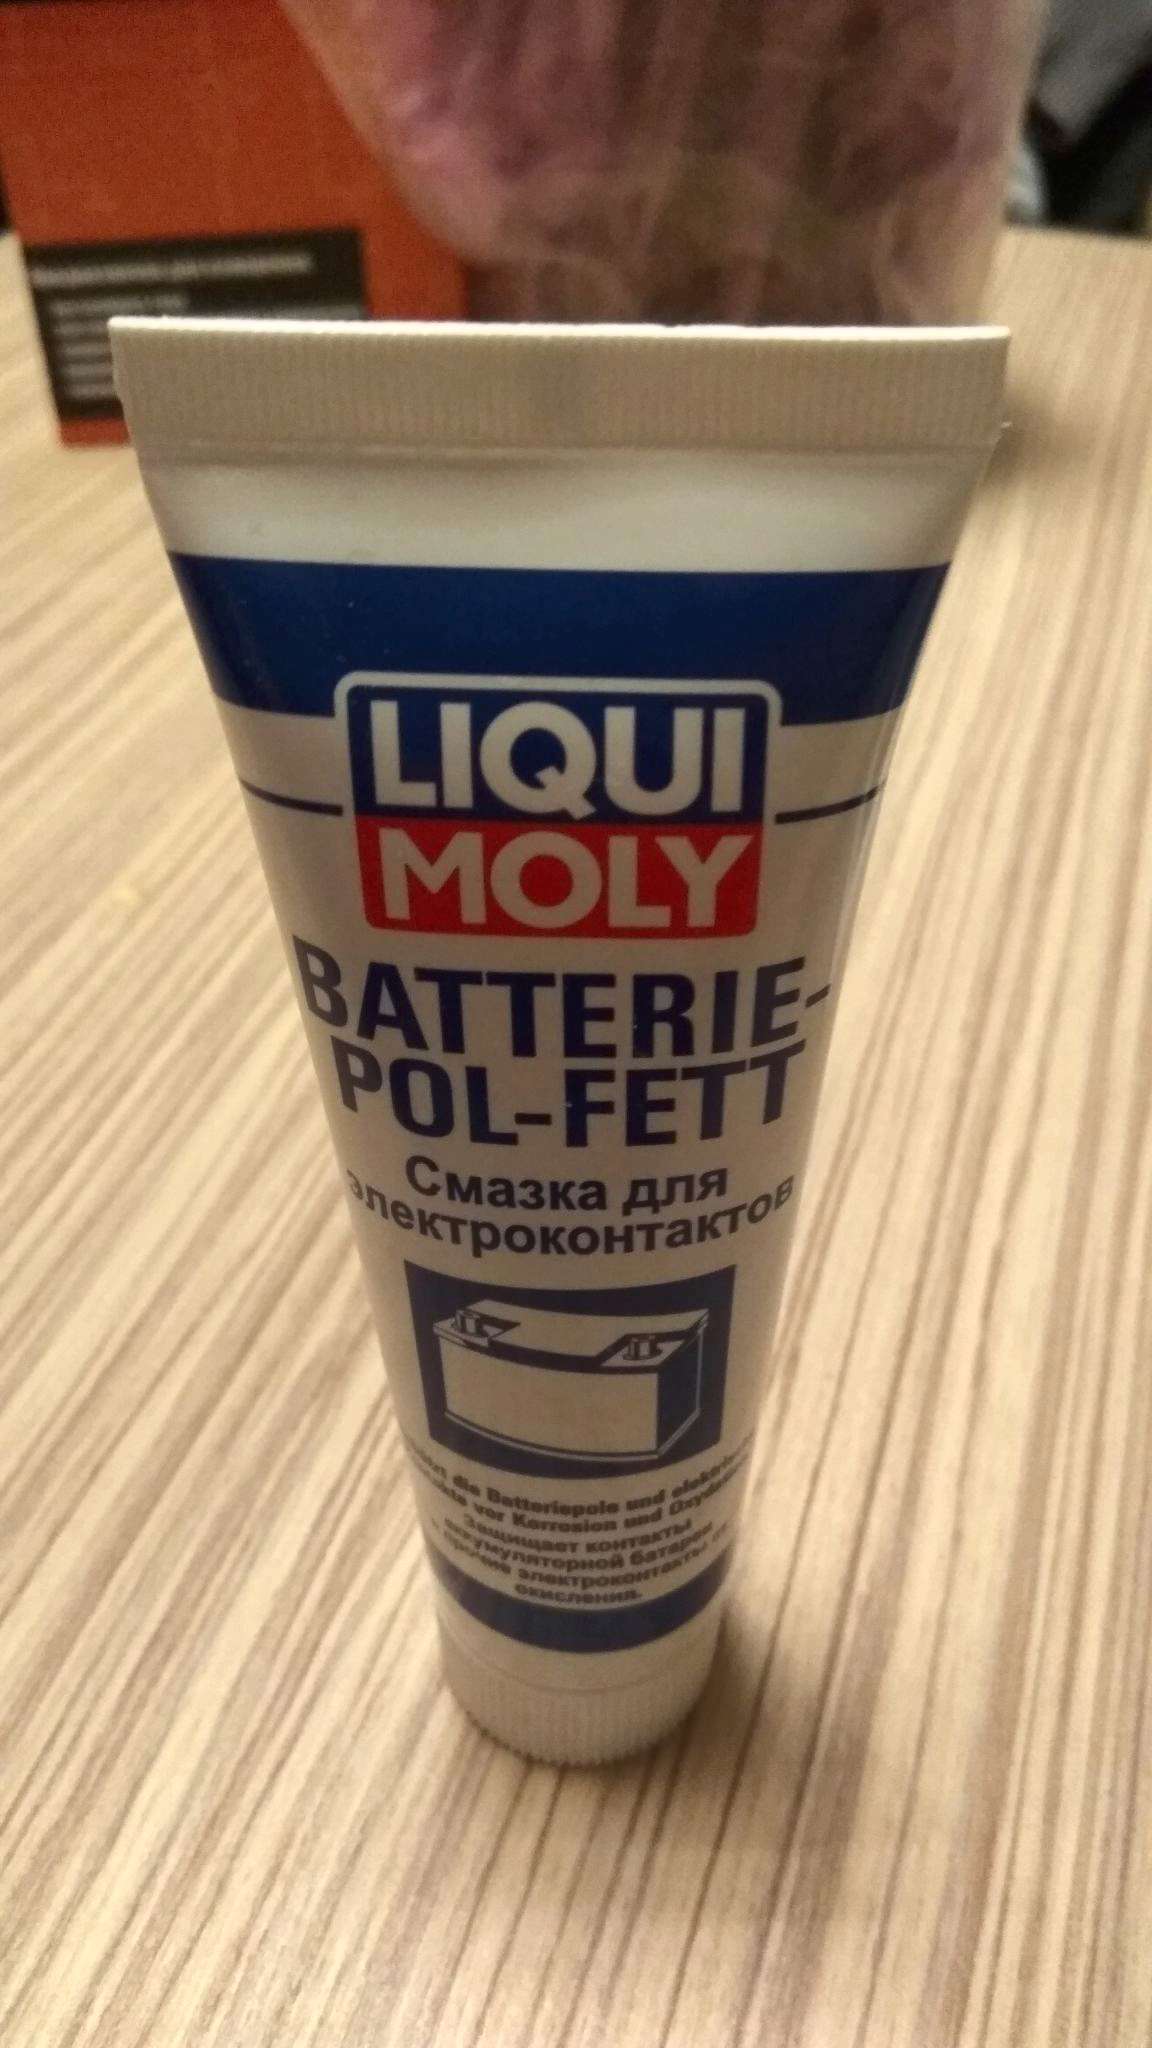 Смазка для электроконтактов LIQUI MOLY 7643 Batterie-Pol-Fett - купить в  ТРИ ТОВАРИЩА, цена на Мегамаркет